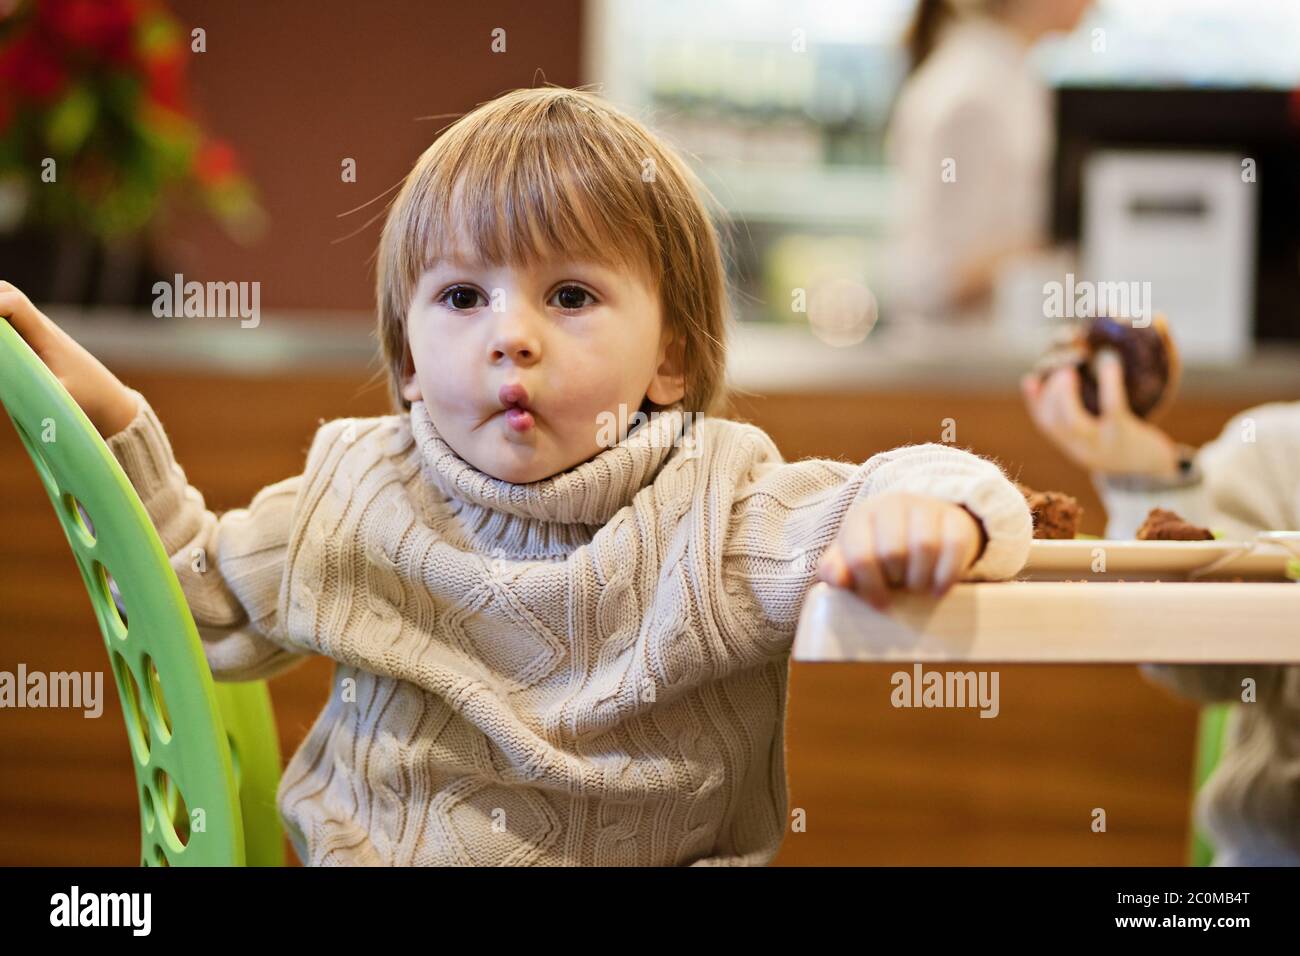 Little toddler boy, eating junk food in restaurant Stock Photo